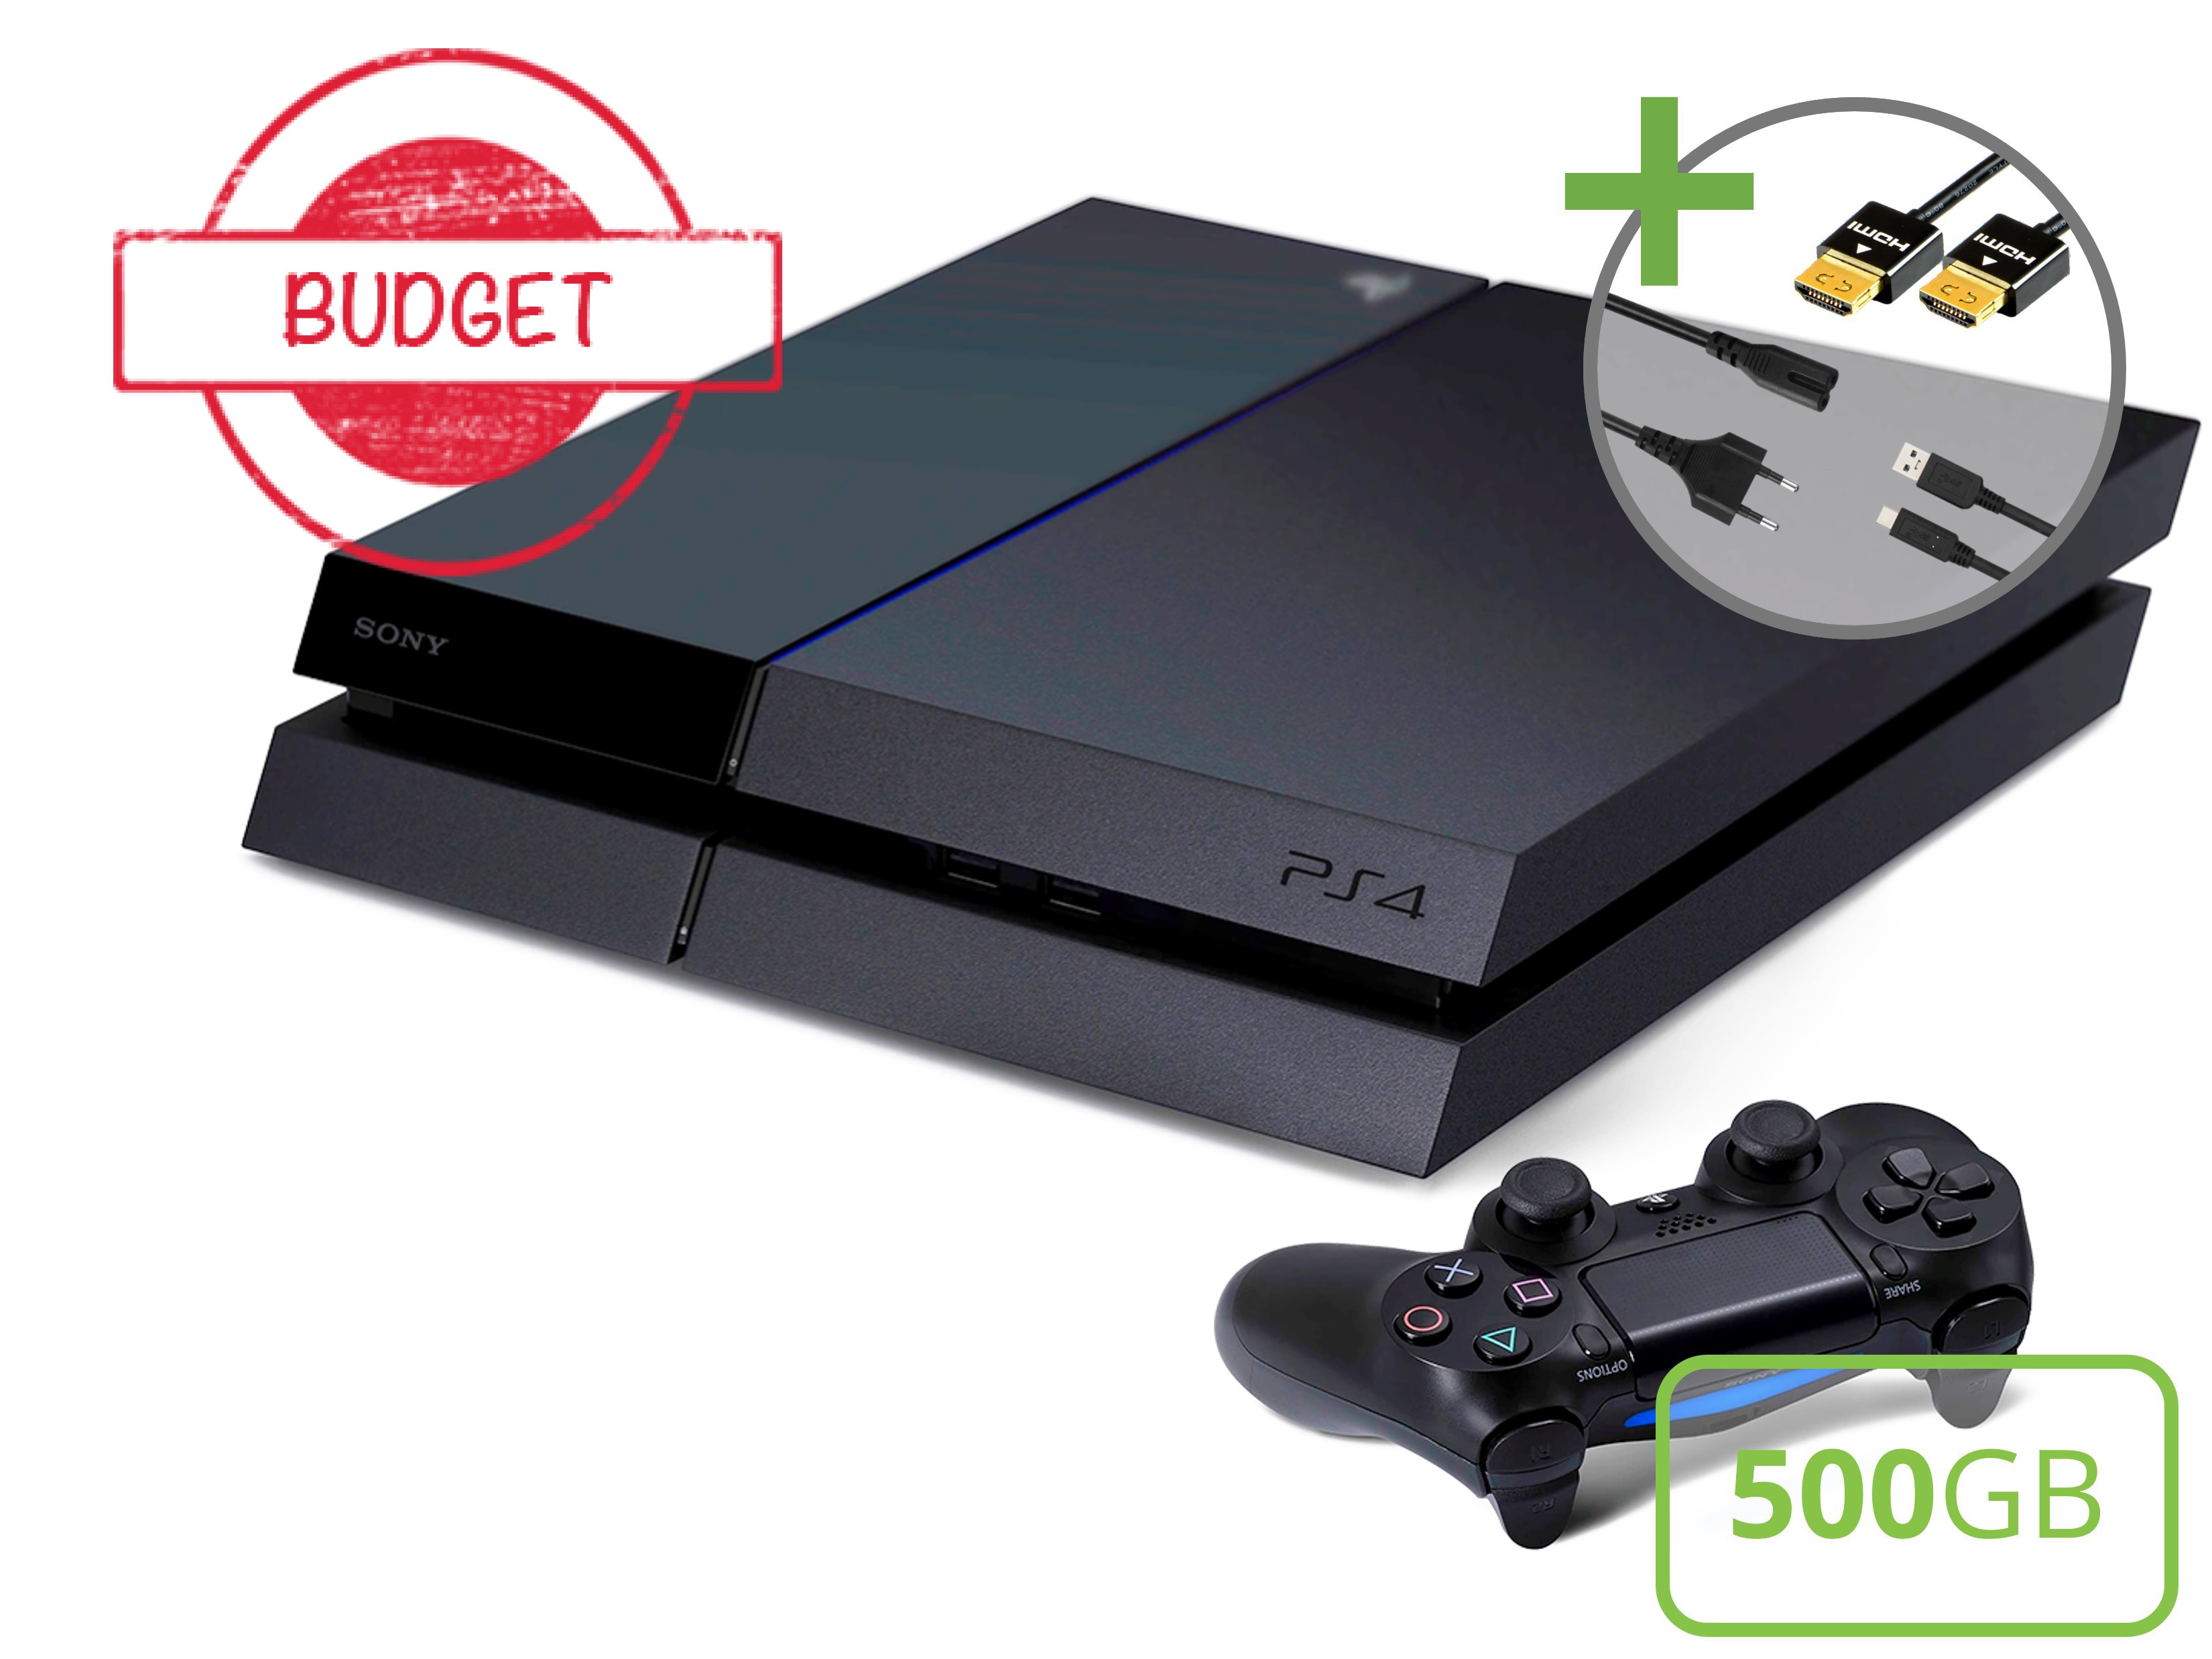 Sony PlayStation 4 Starter Pack - 500GB DualShock V1 Edition - Budget - Playstation 4 Hardware